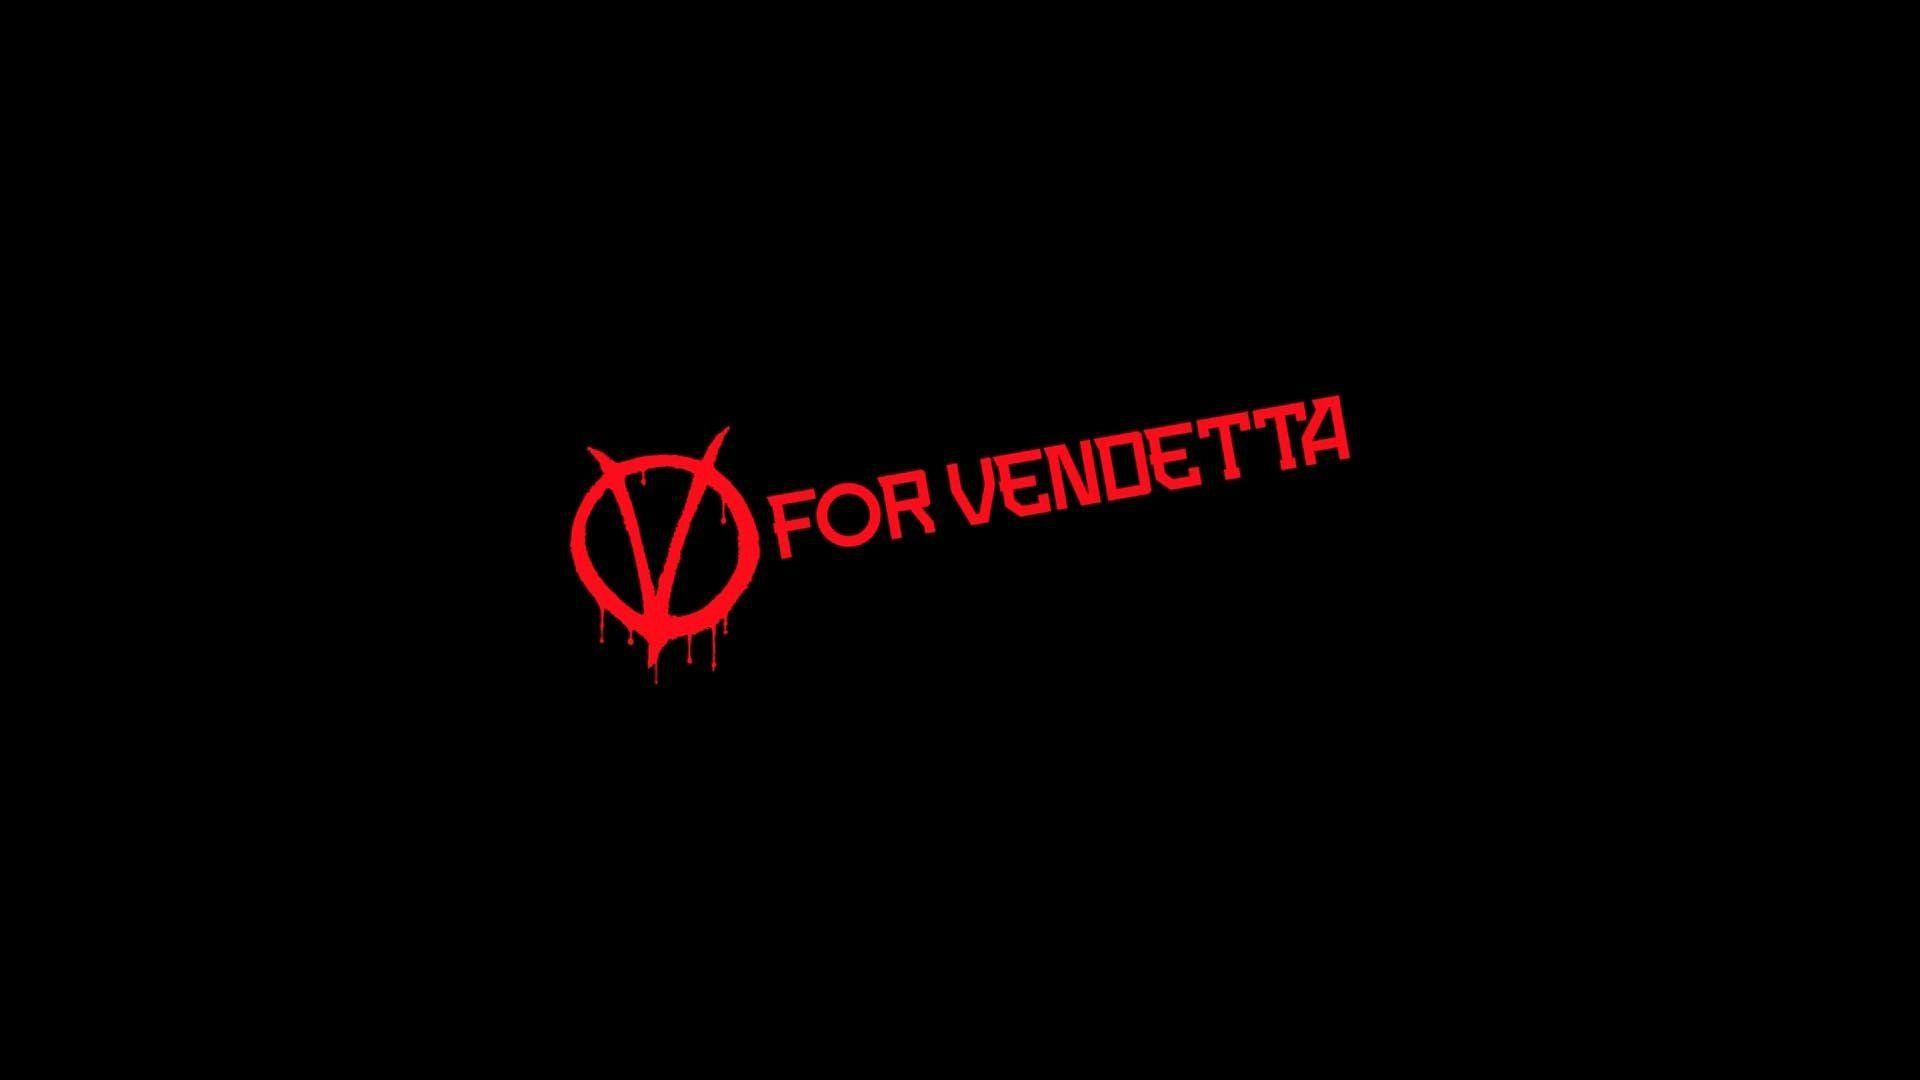 V For Vendetta Full HD Wallpaper and Background Imagex1080